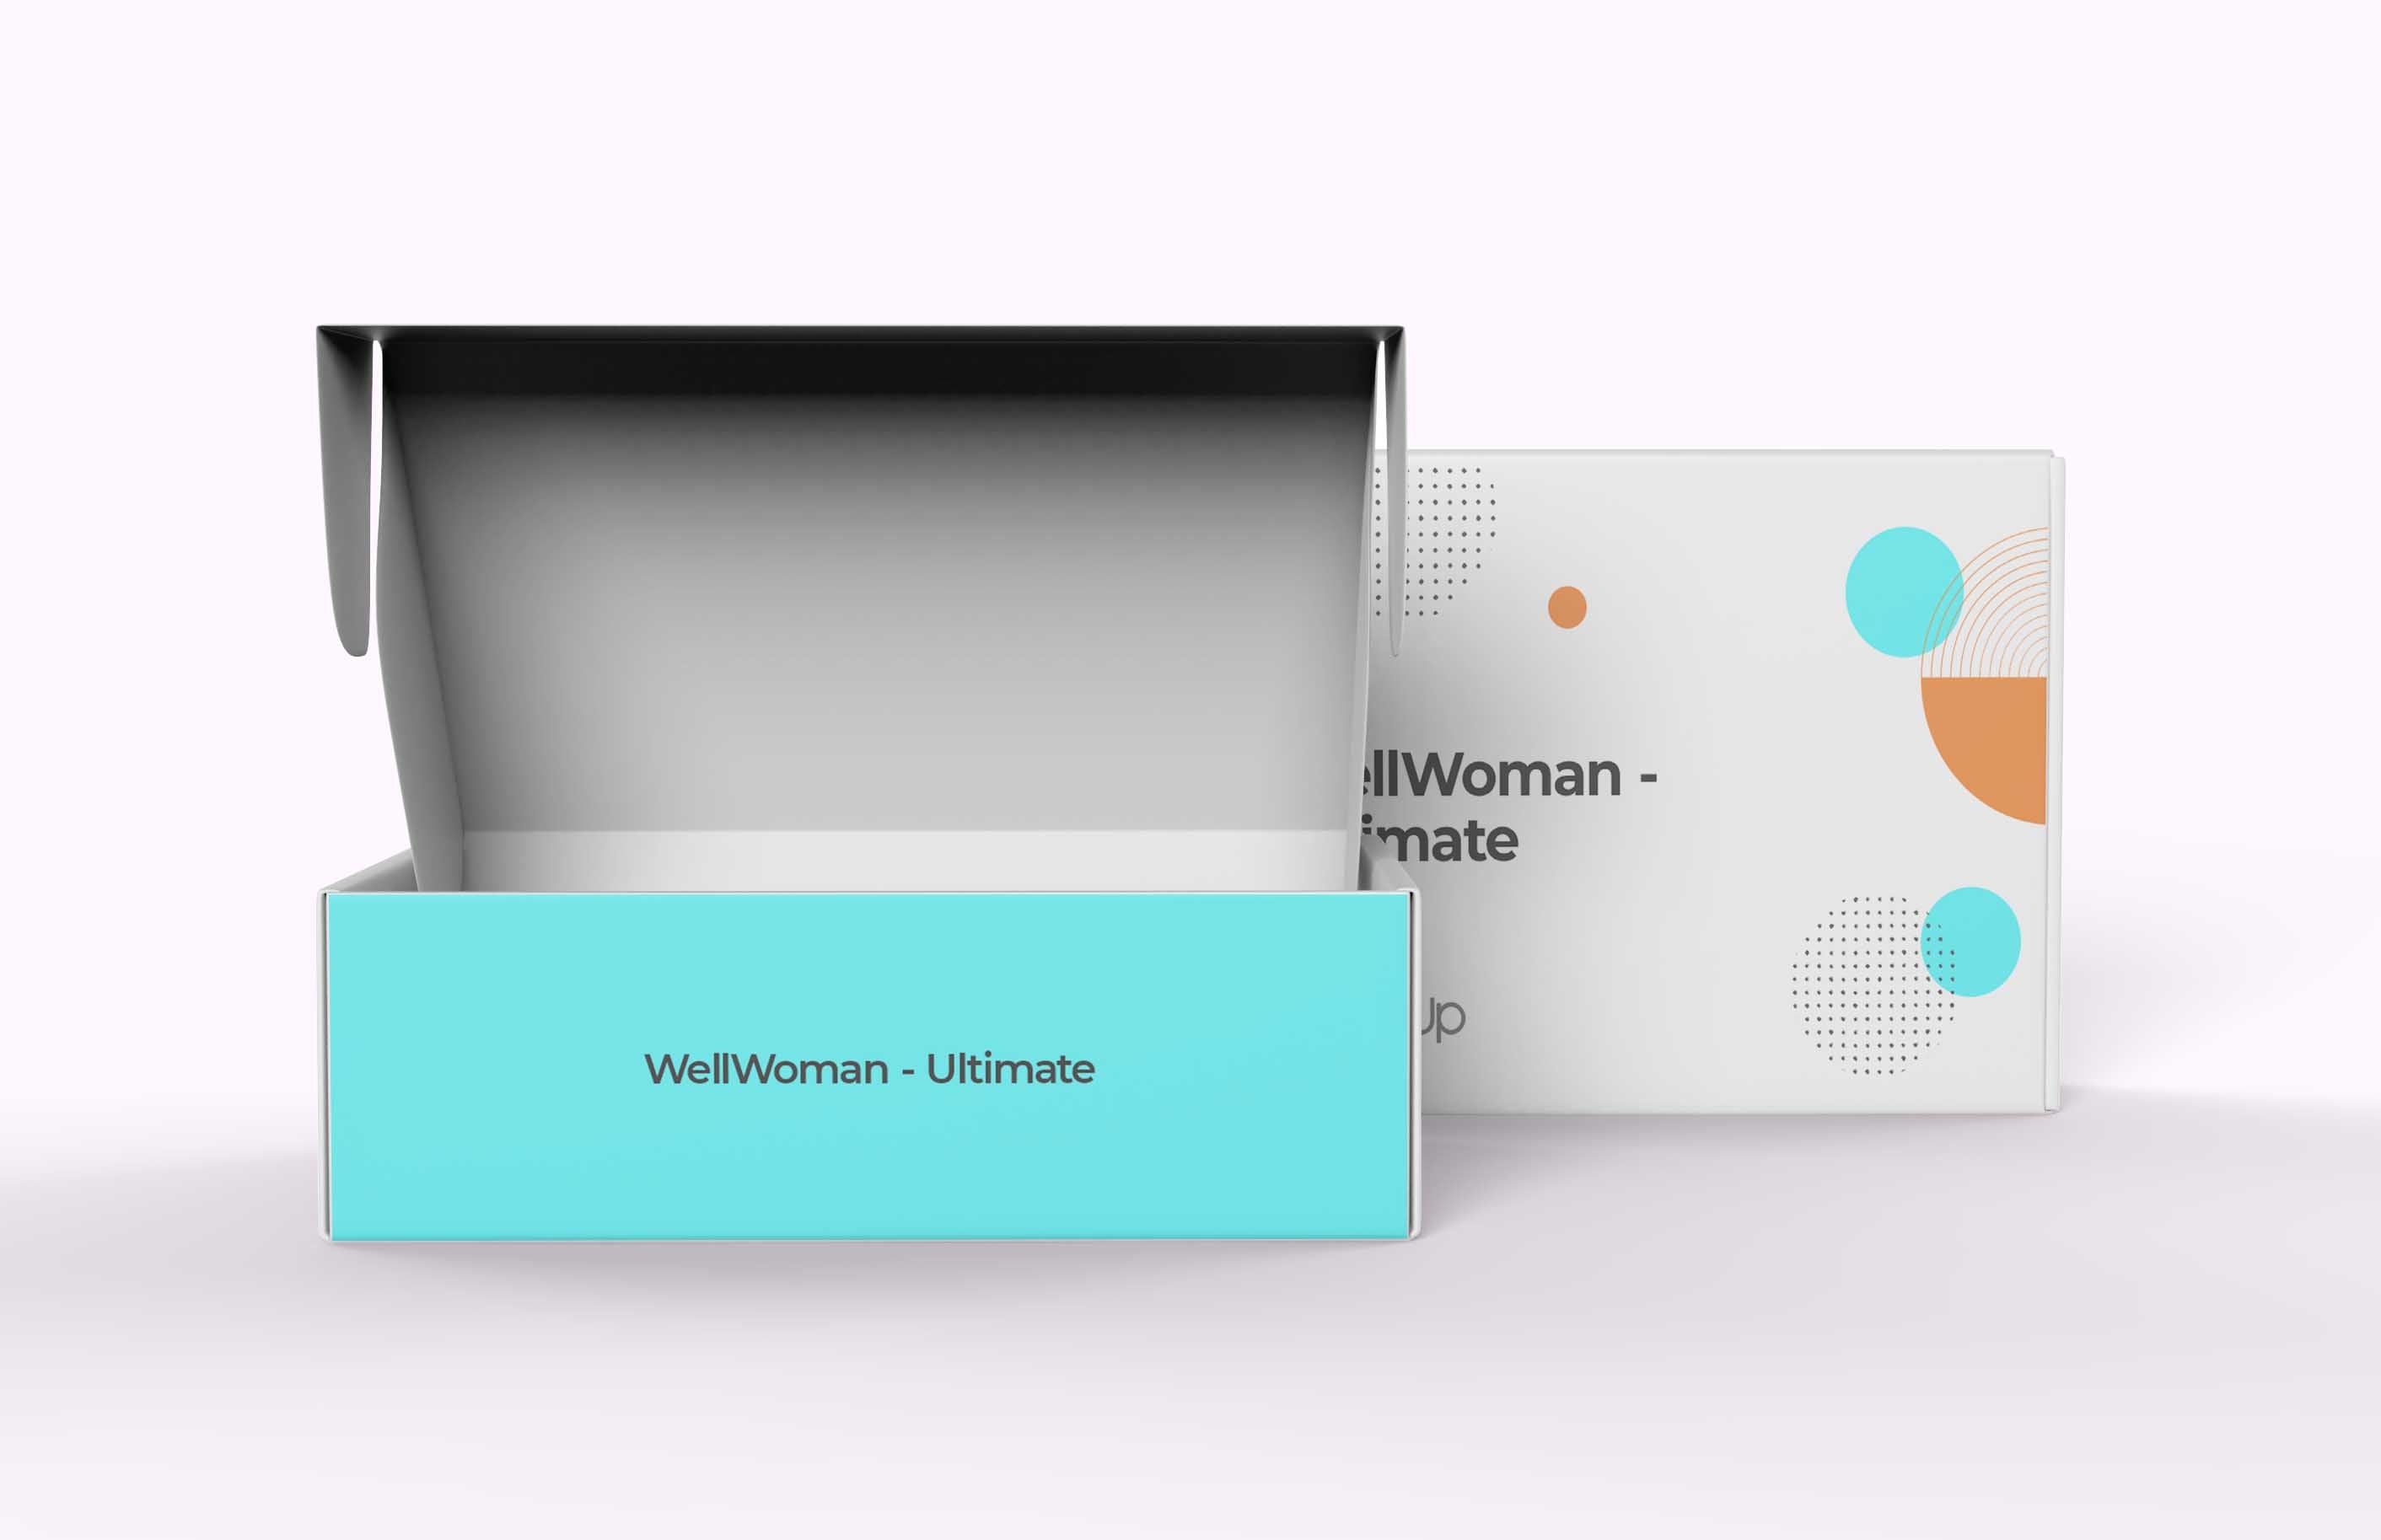 WellWoman - Ultimate